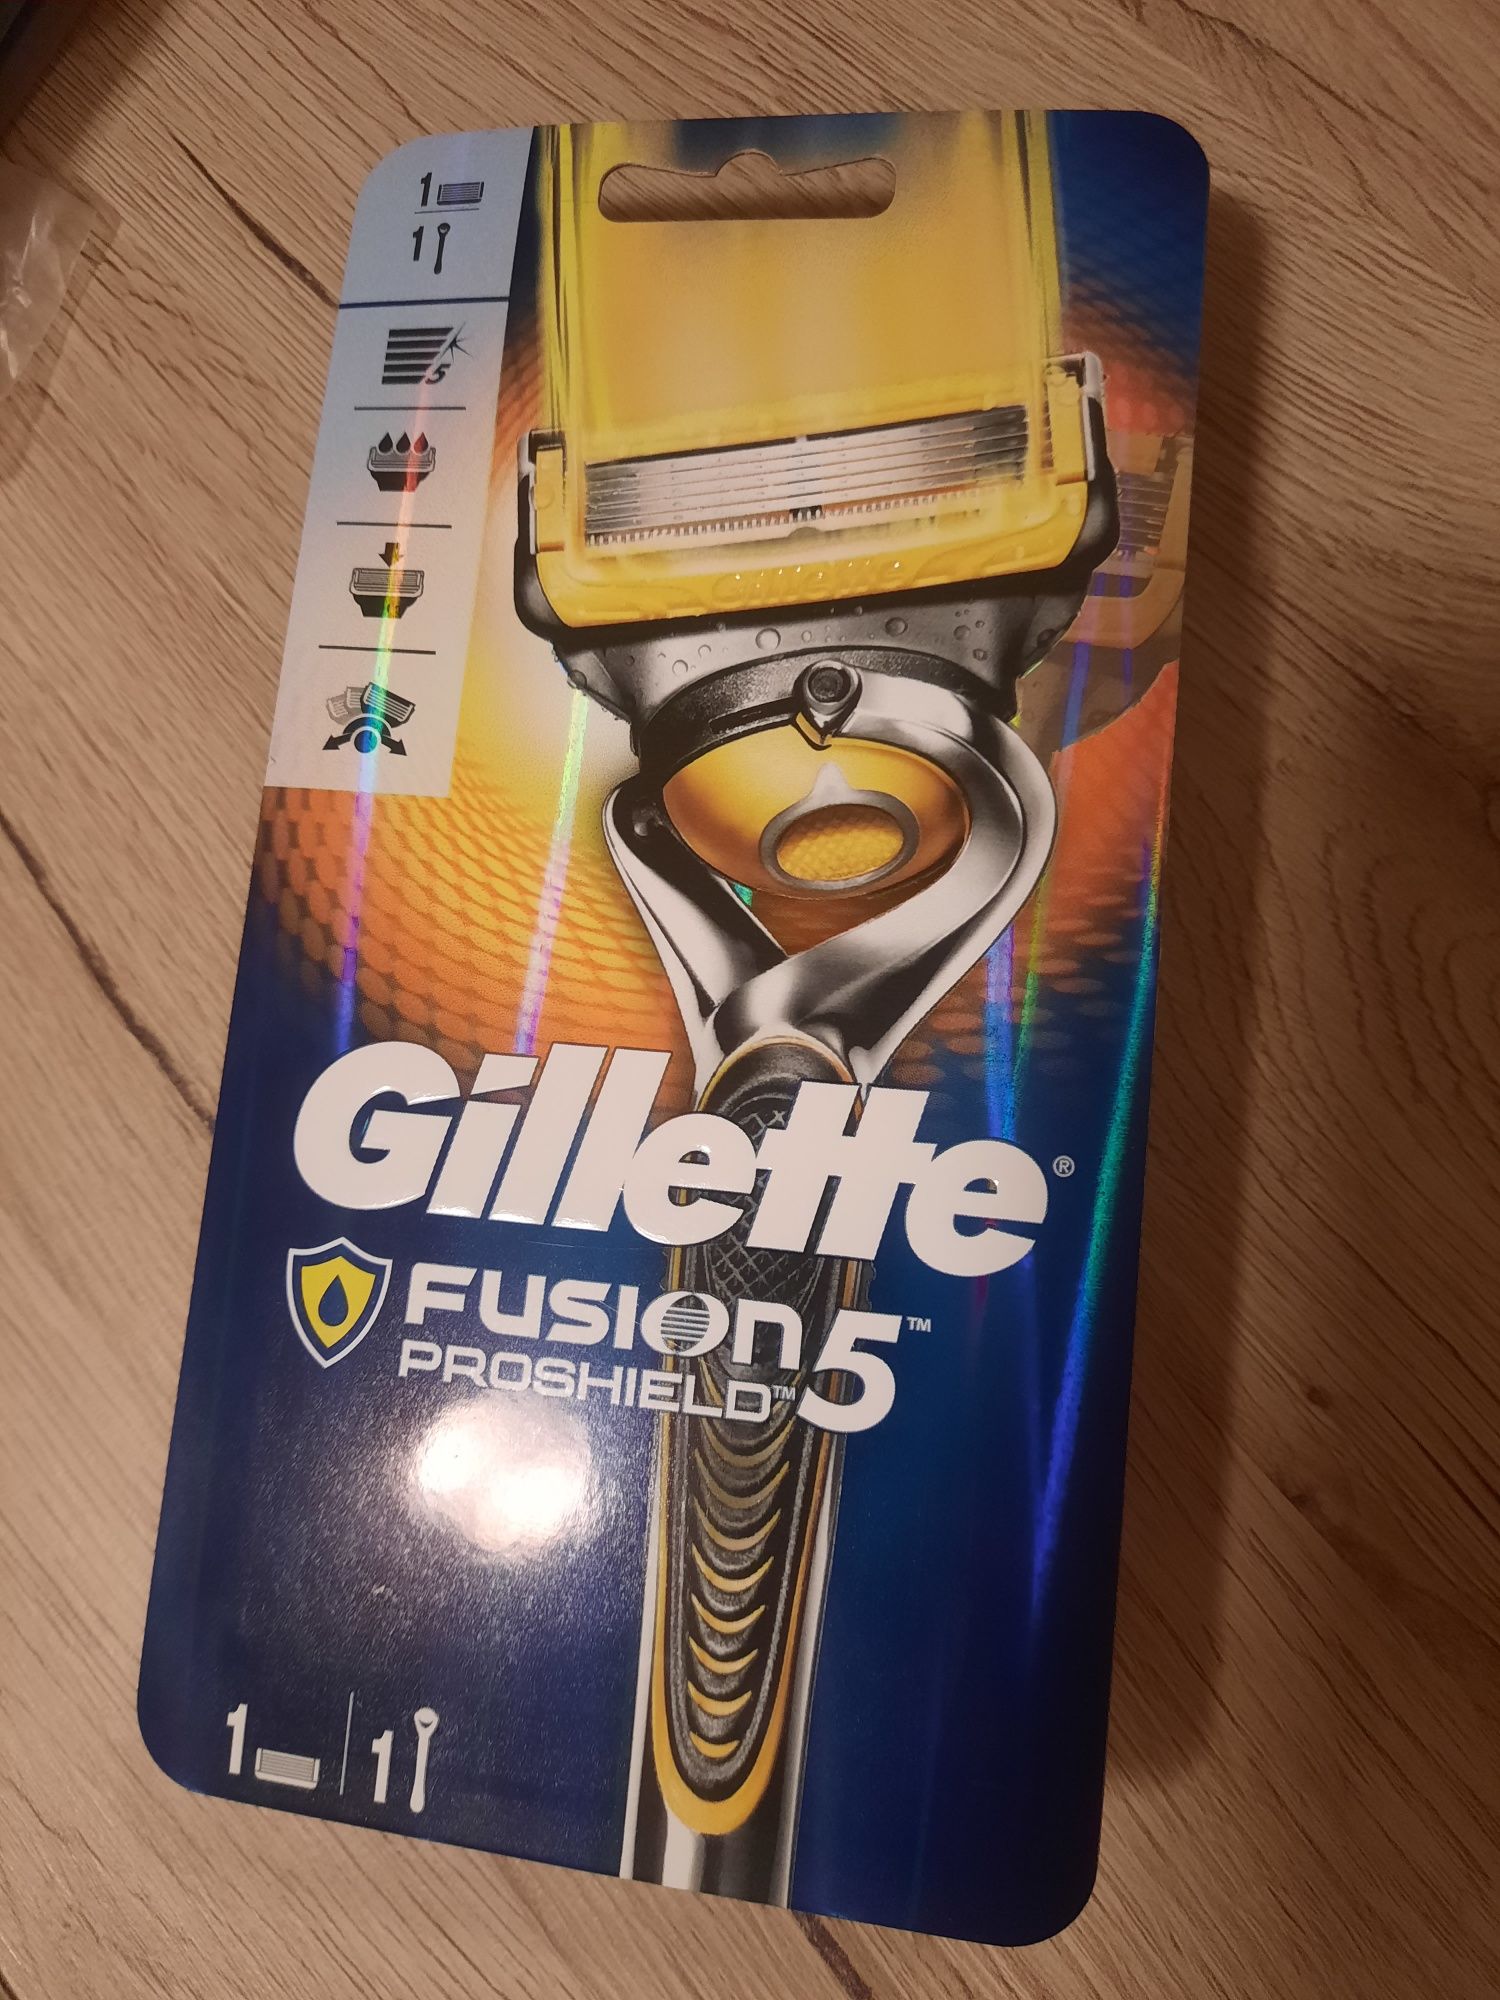 Maszynka do Golenia Gillette Fusion 5 ProShield
4